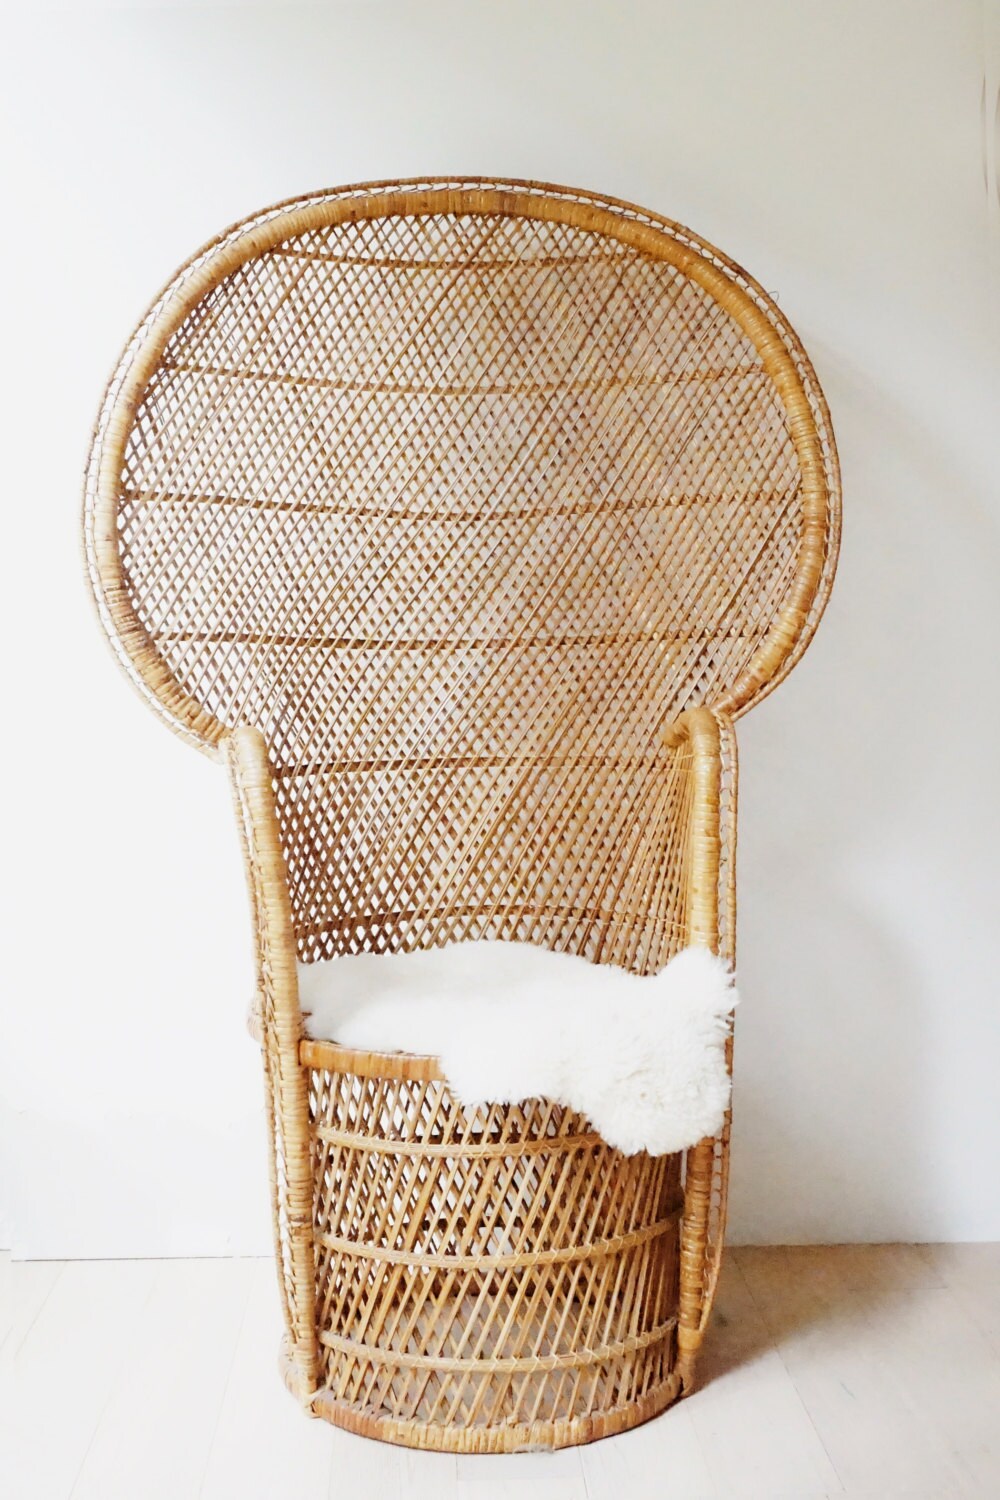 Vintage Peacock Chair Rattan Full Size Woven Handmade 70s